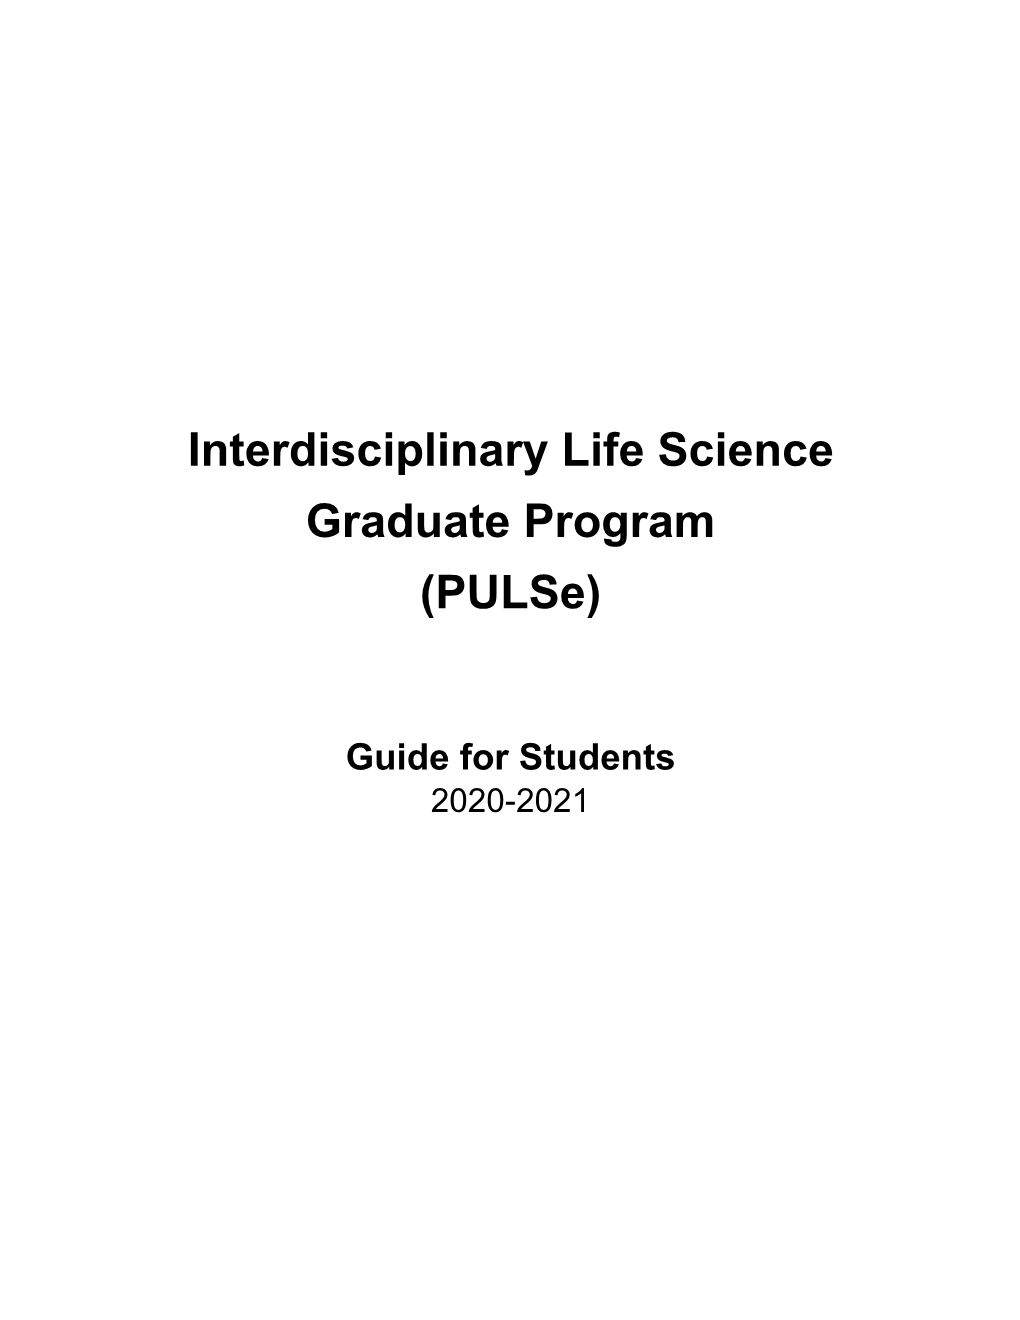 Interdisciplinary Life Science Graduate Program (Pulse)